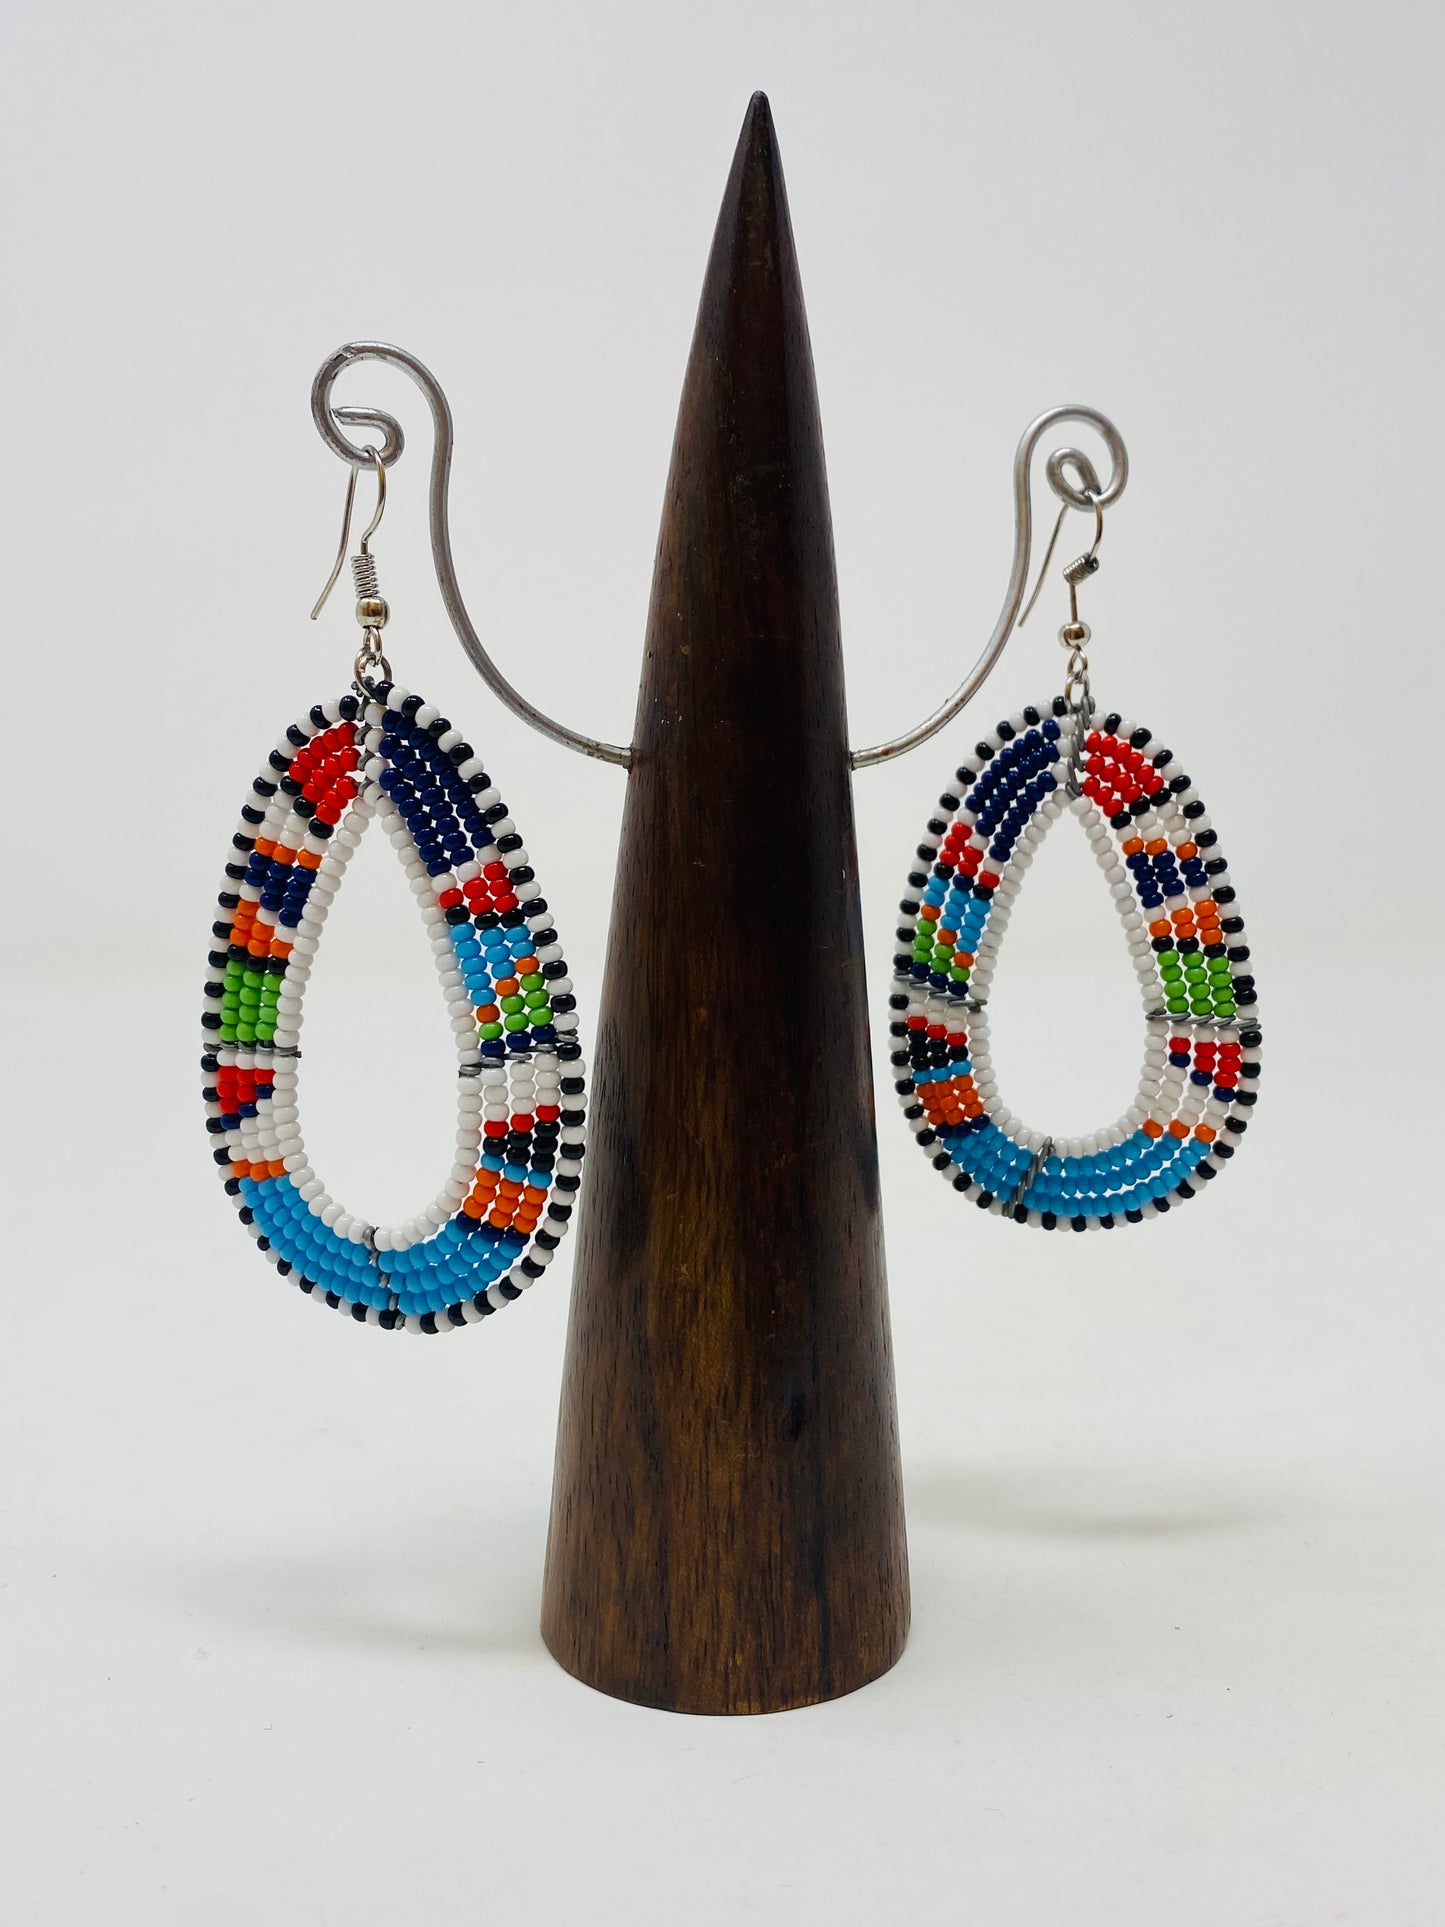 Artisan Oval Teardrop Earrings made with glass beads - Violet Elizabeth